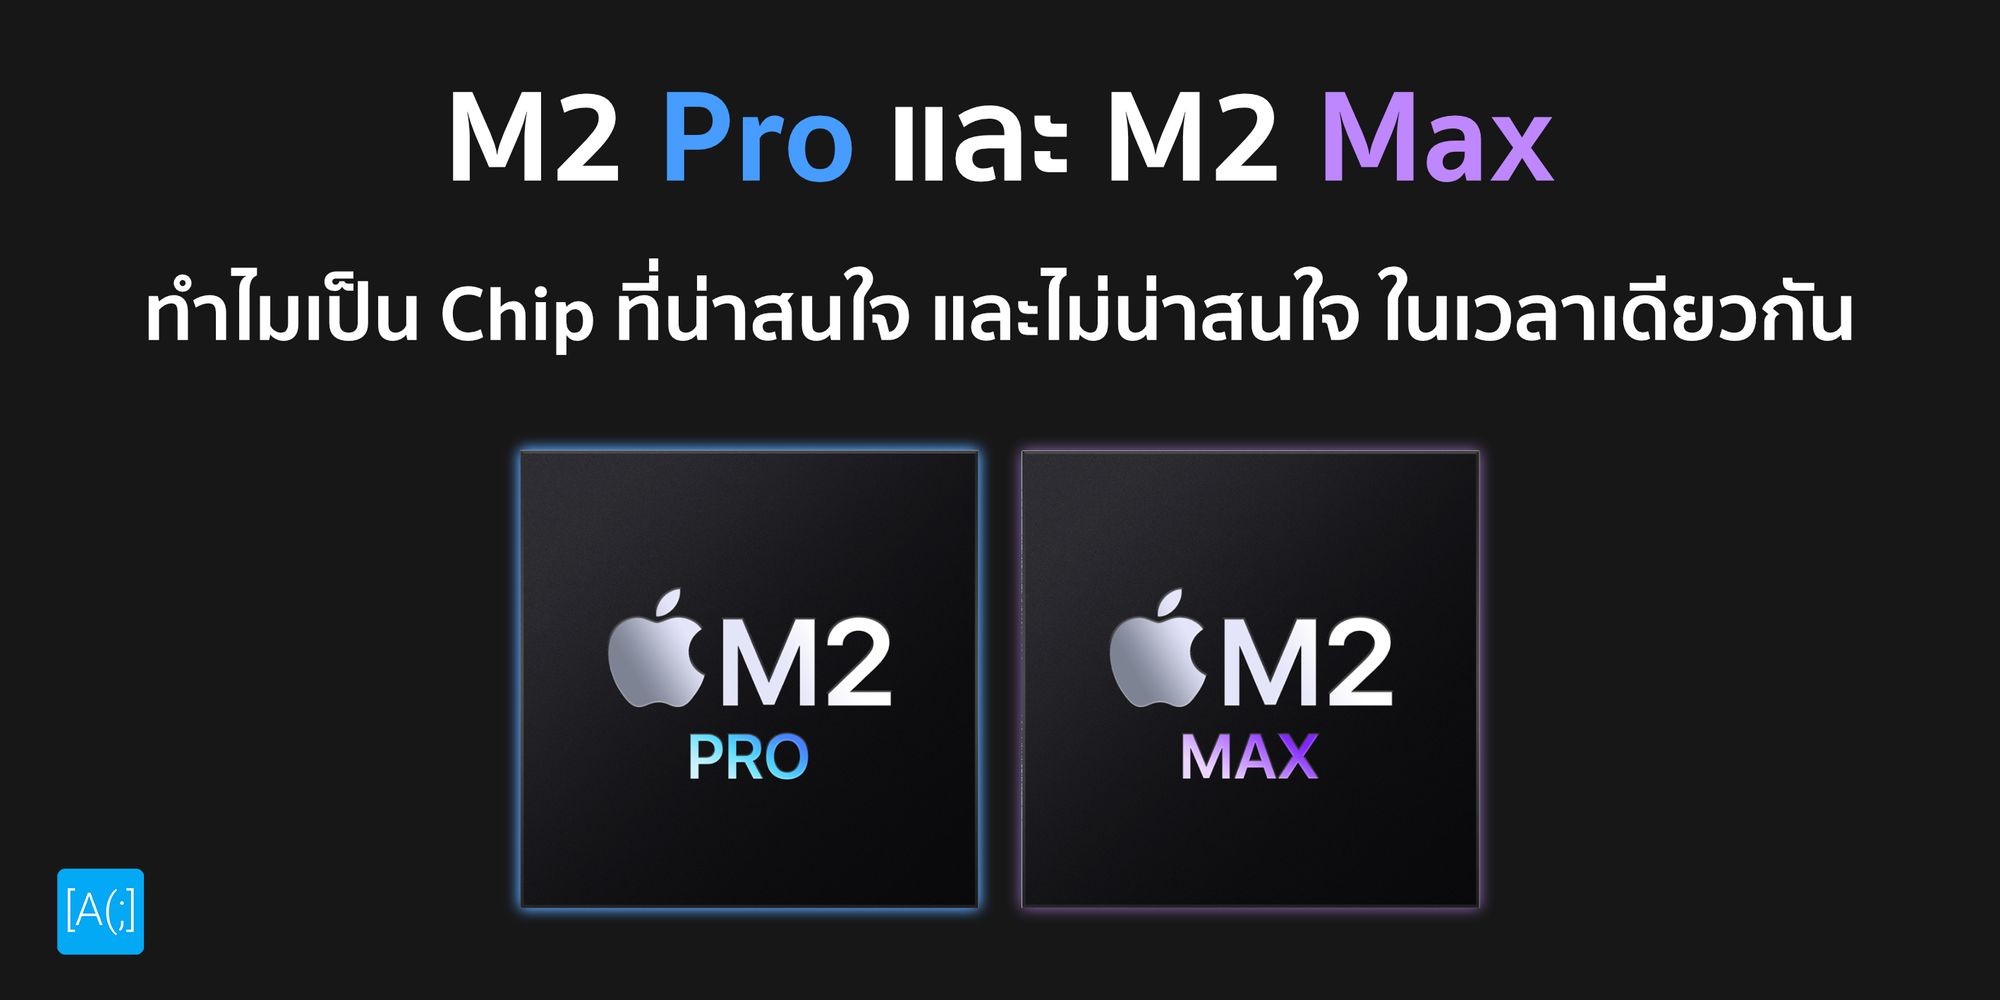 M2 Pro และ M2 Max ทำไมเป็น Chip ที่น่าสนใจ และไม่น่าสนใจ ในเวลาเดียวกัน